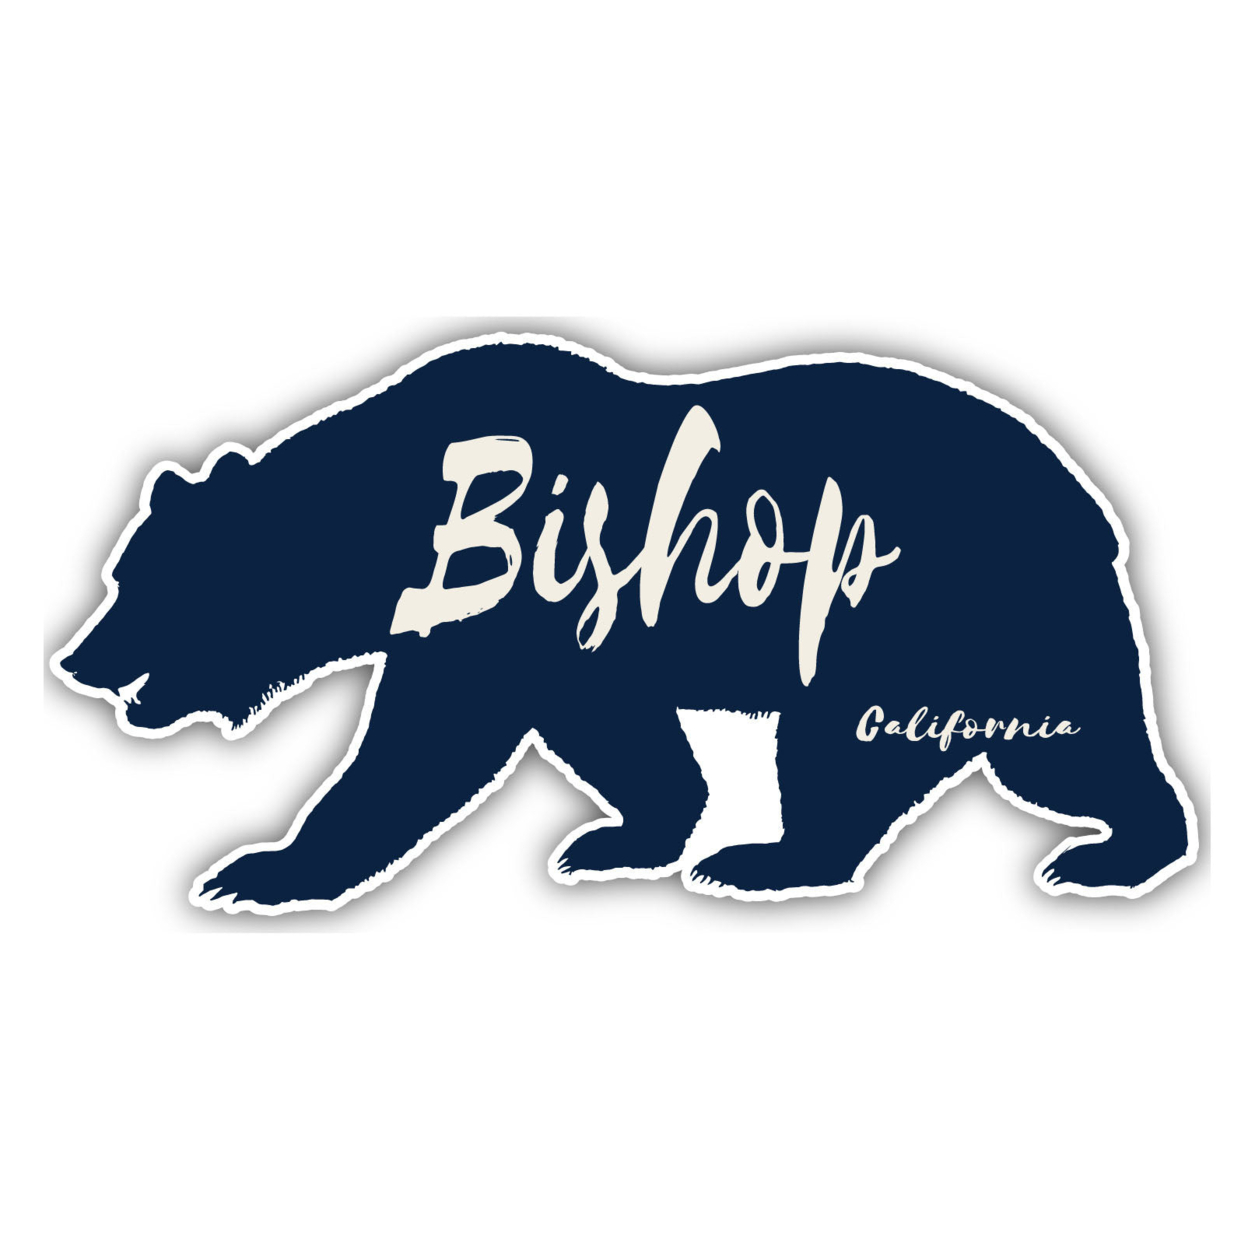 Bishop California Souvenir Decorative Stickers (Choose Theme And Size) - Single Unit, 4-Inch, Bear